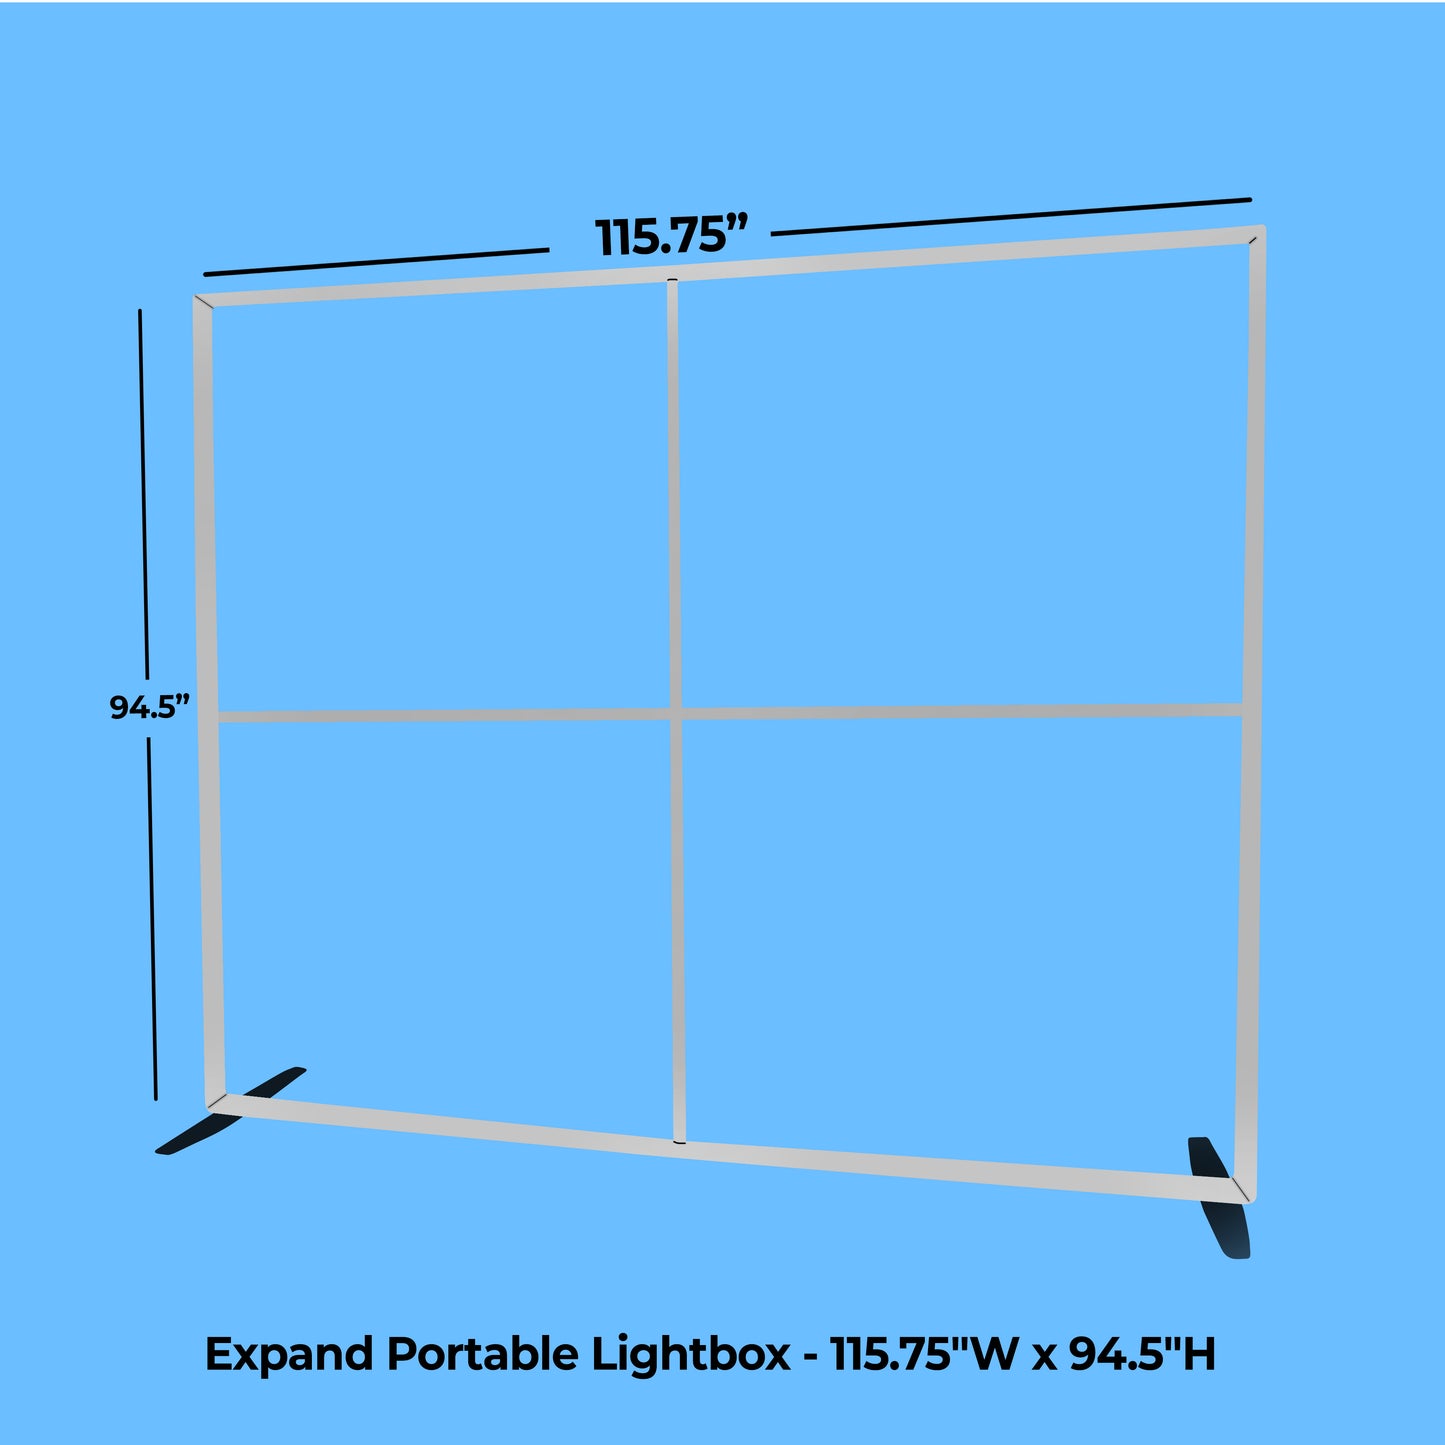 Expand Portable Lightbox - 115.75"W x 94.5"H